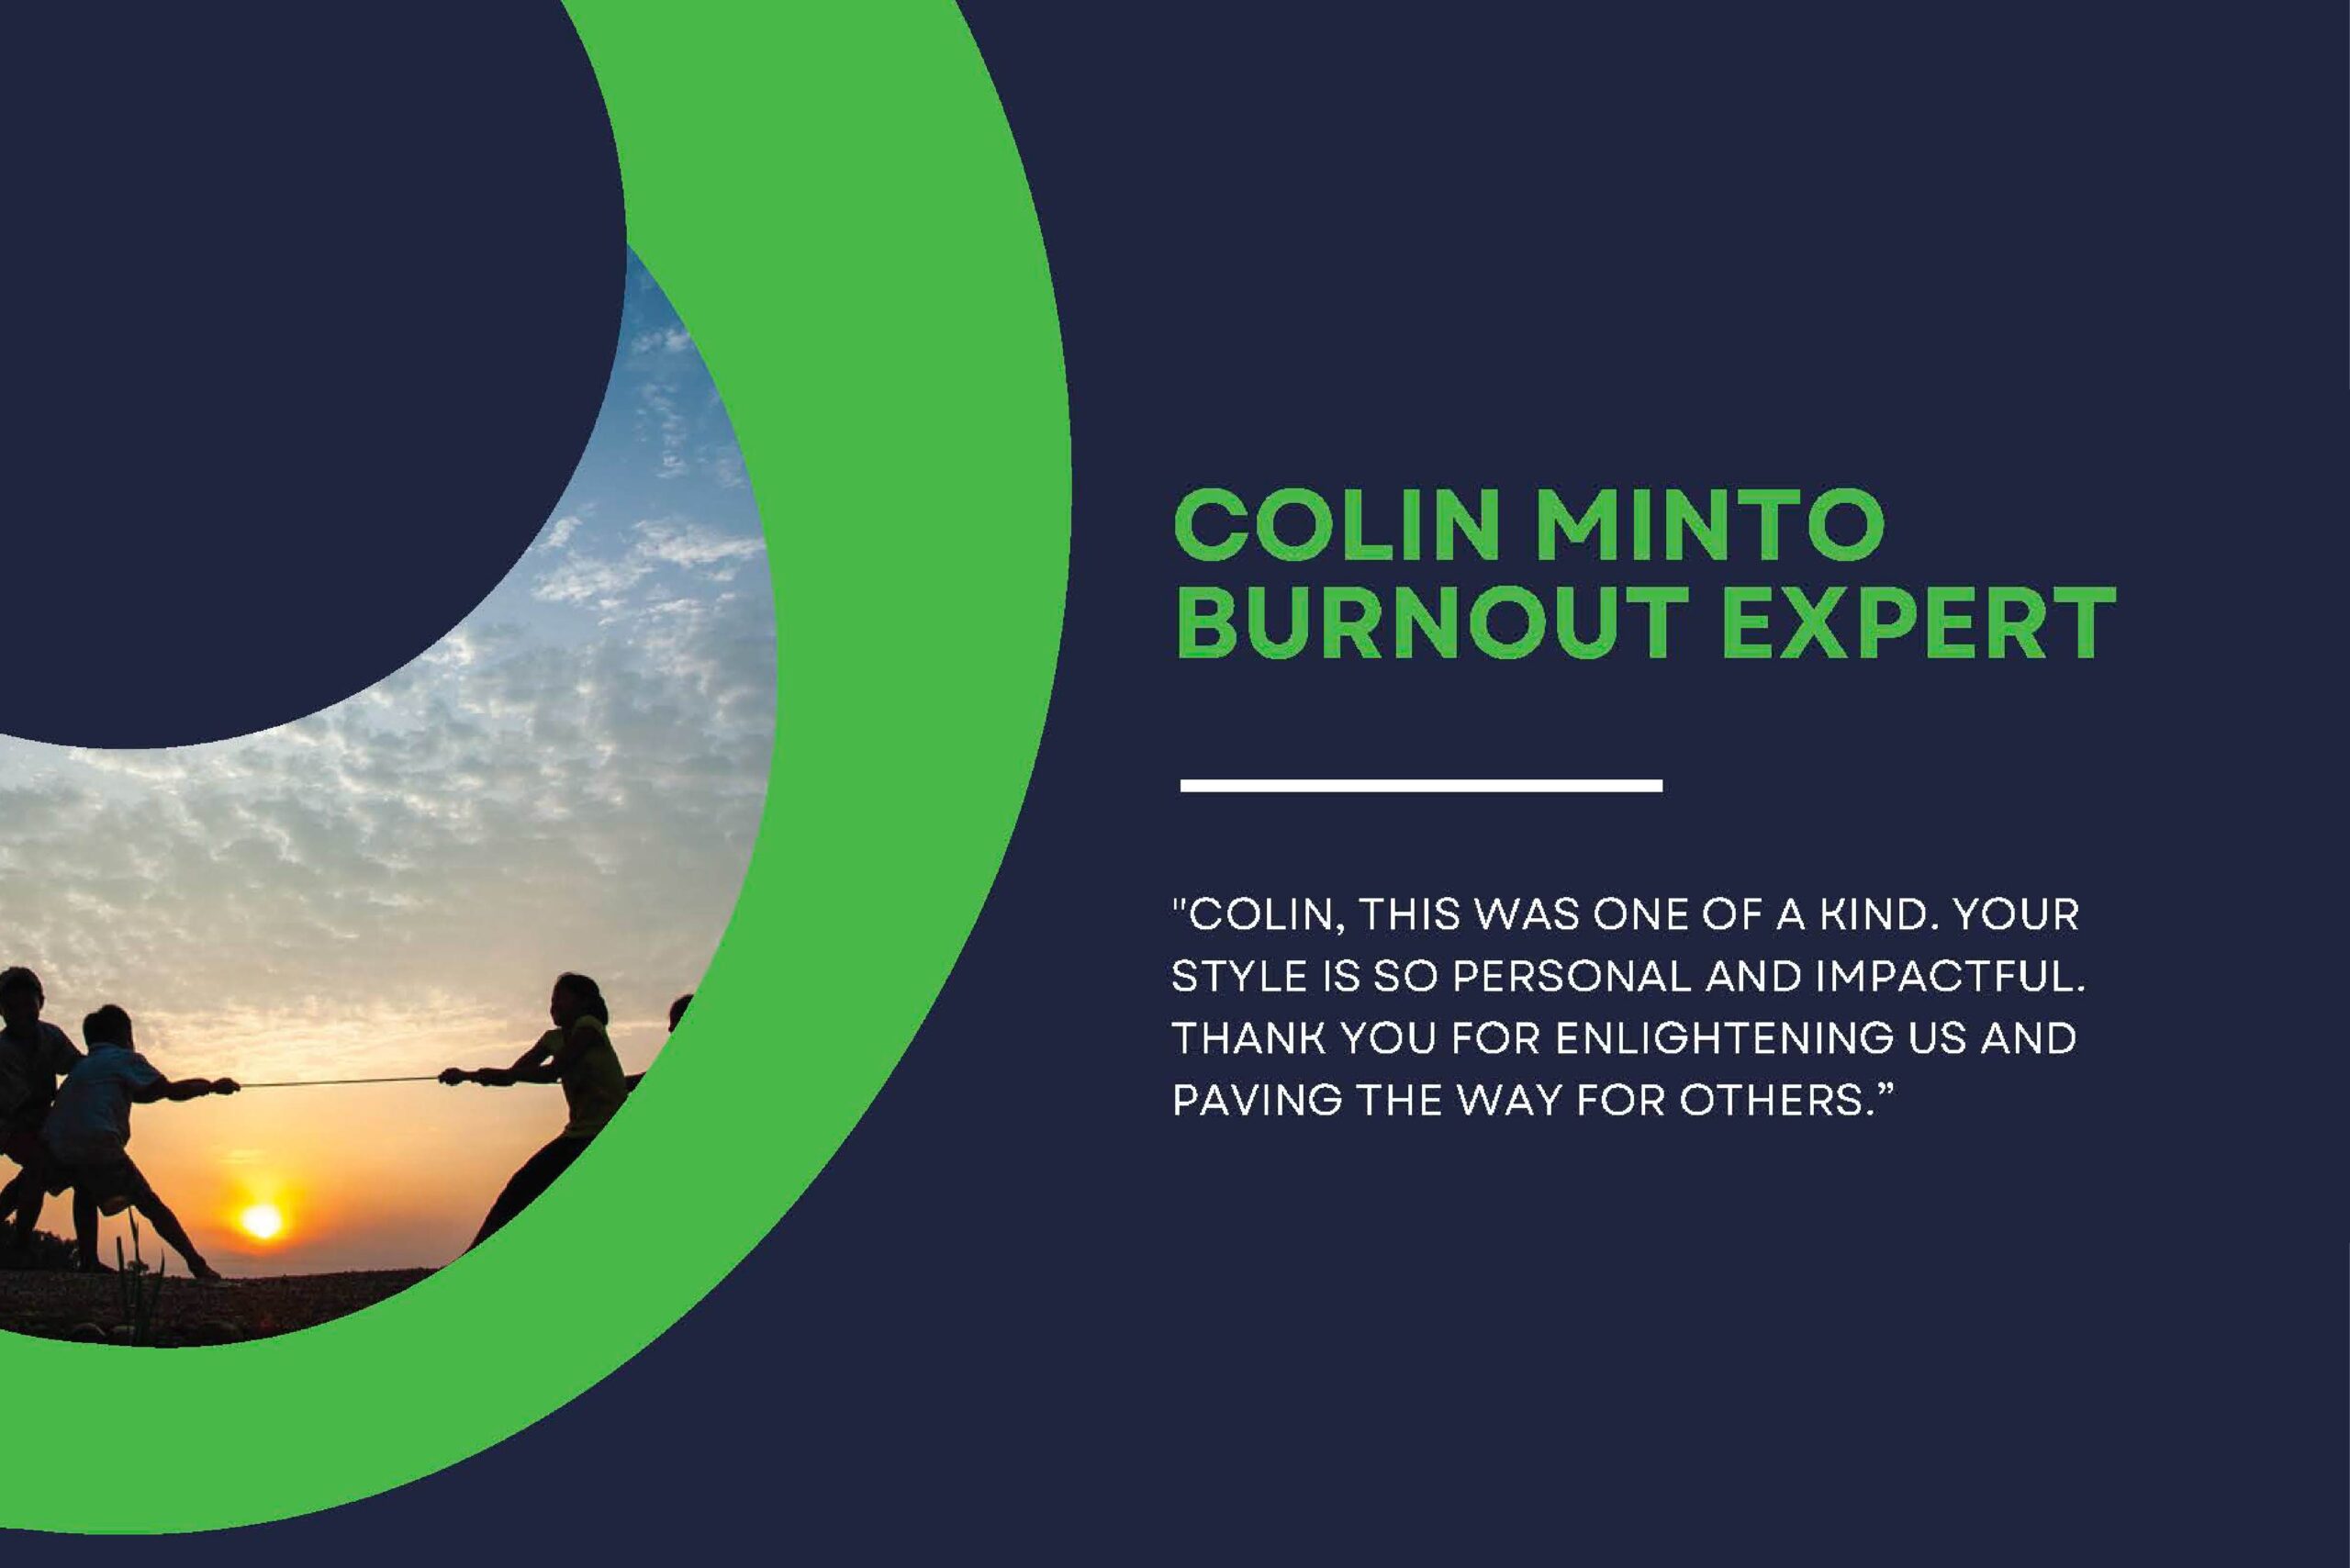 Colin Minto – Brand Ambassador for Jobs4Neurodiversity & Burnout Expert